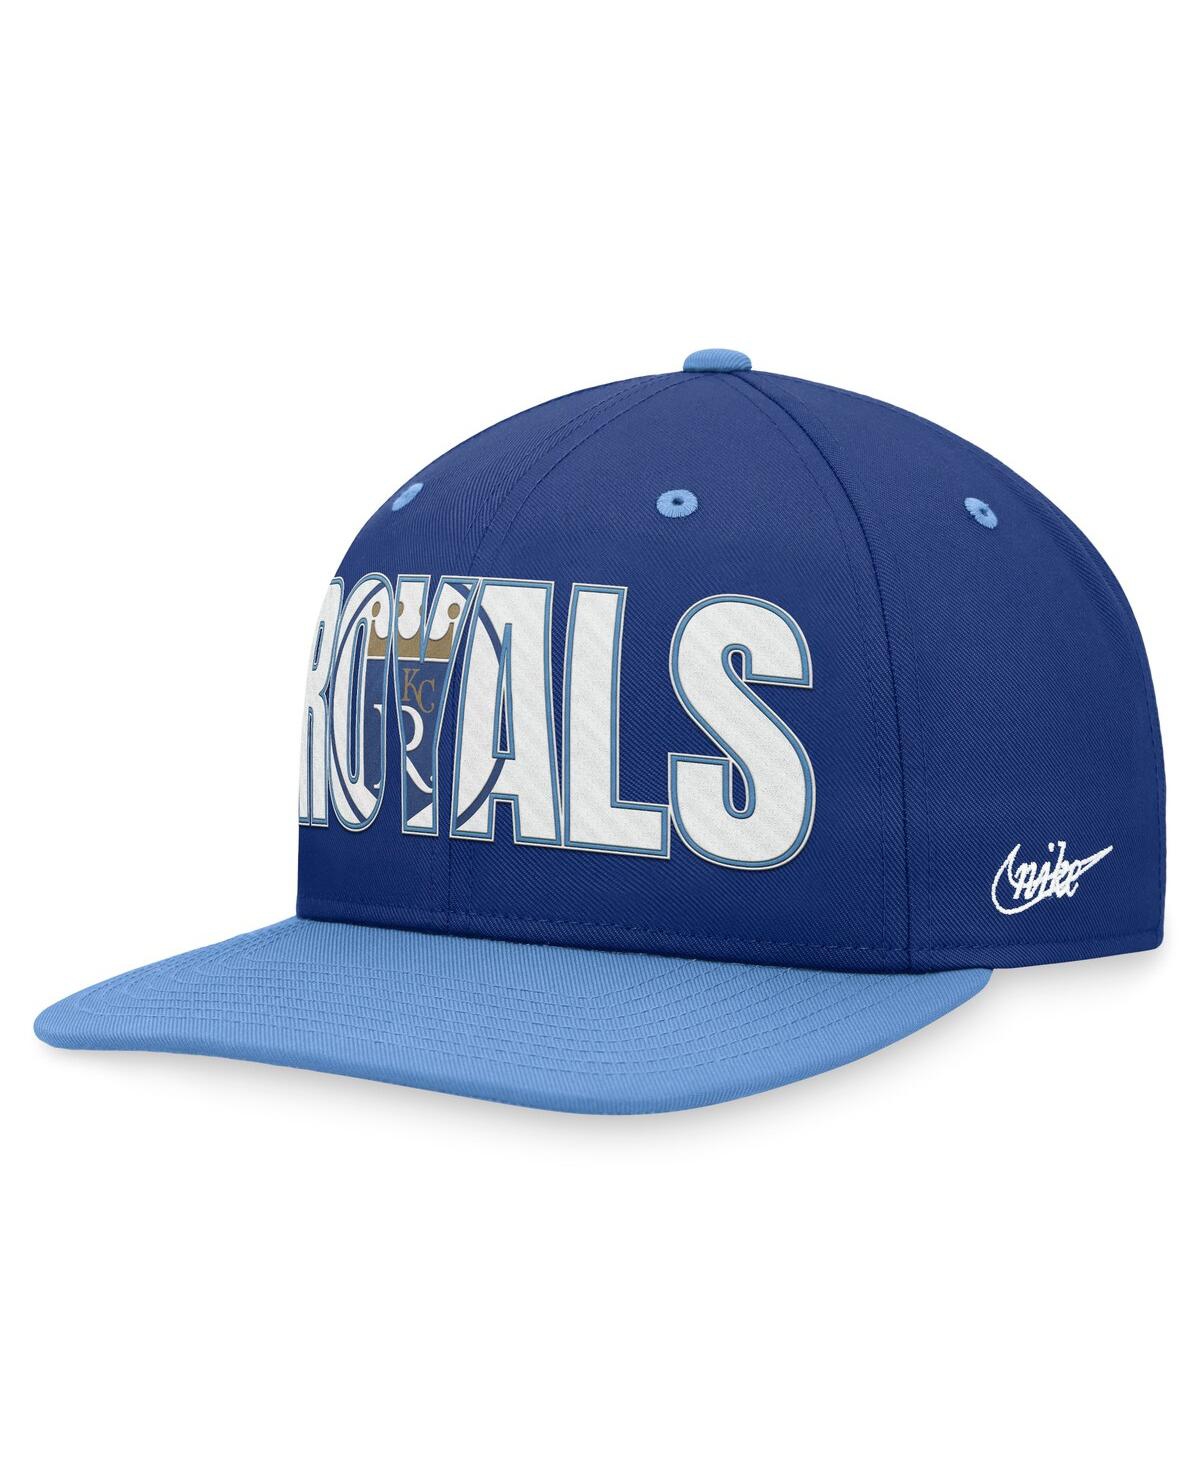 Shop Nike Men's  Royal Kansas City Royals Cooperstown Collection Pro Snapback Hat